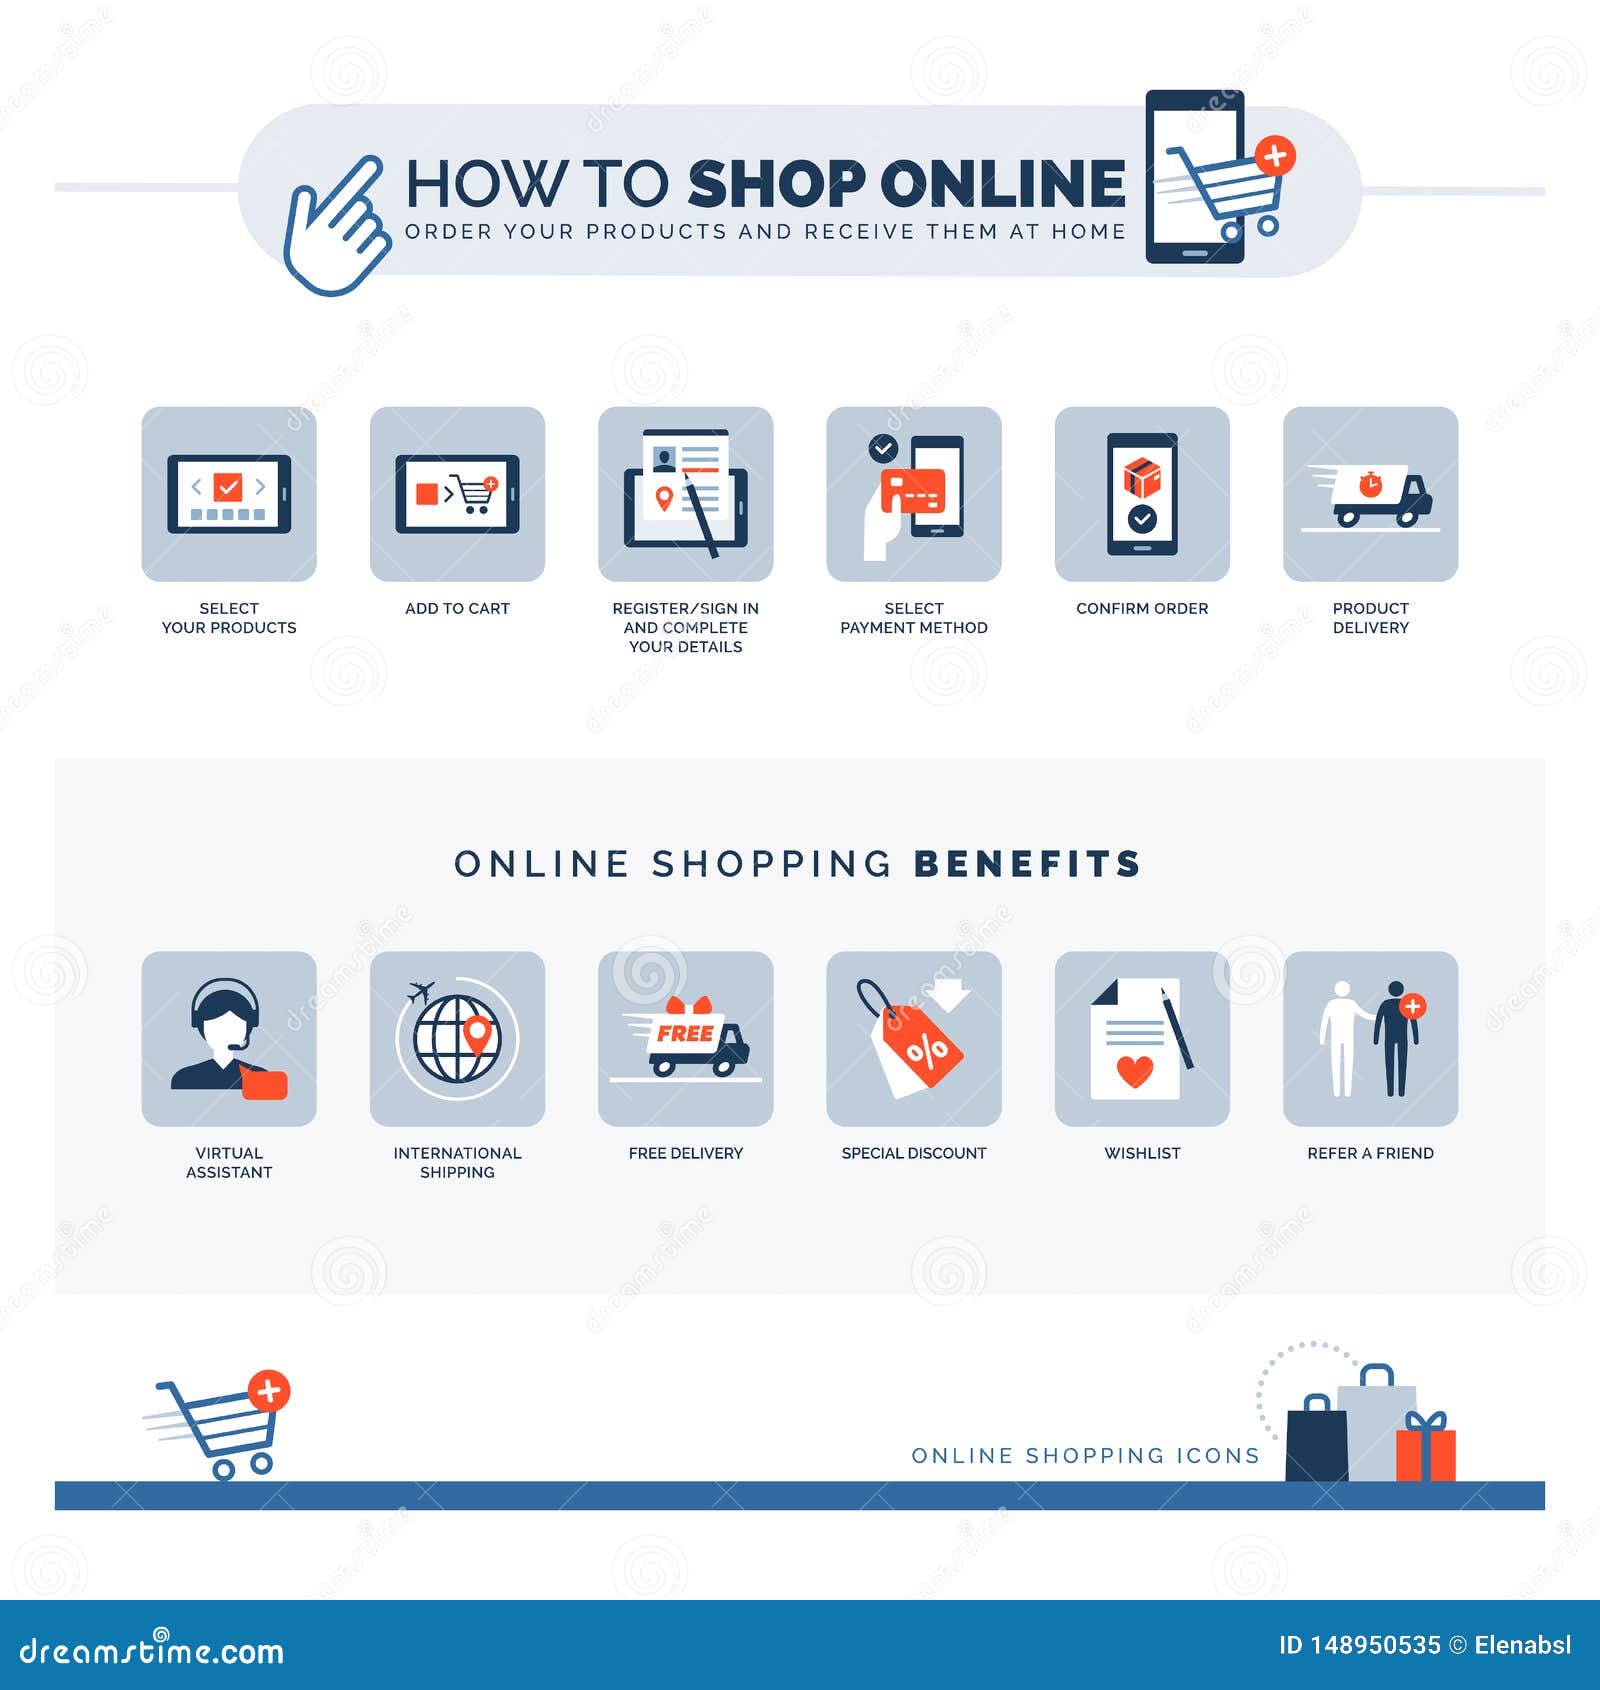 vShop - Free online shopping platform